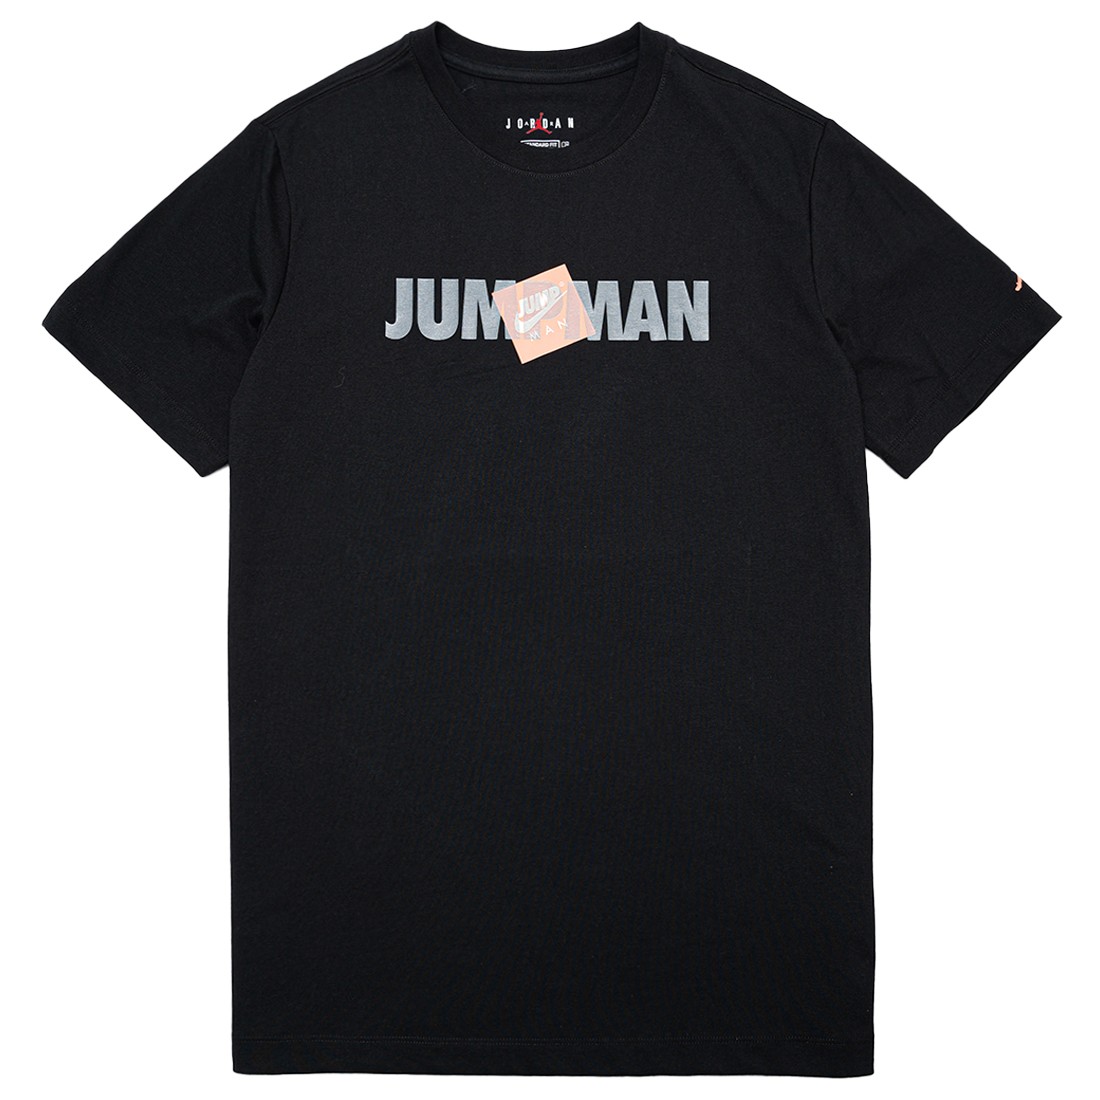 Jordan Men Jumpman Classics Tee (black / white)